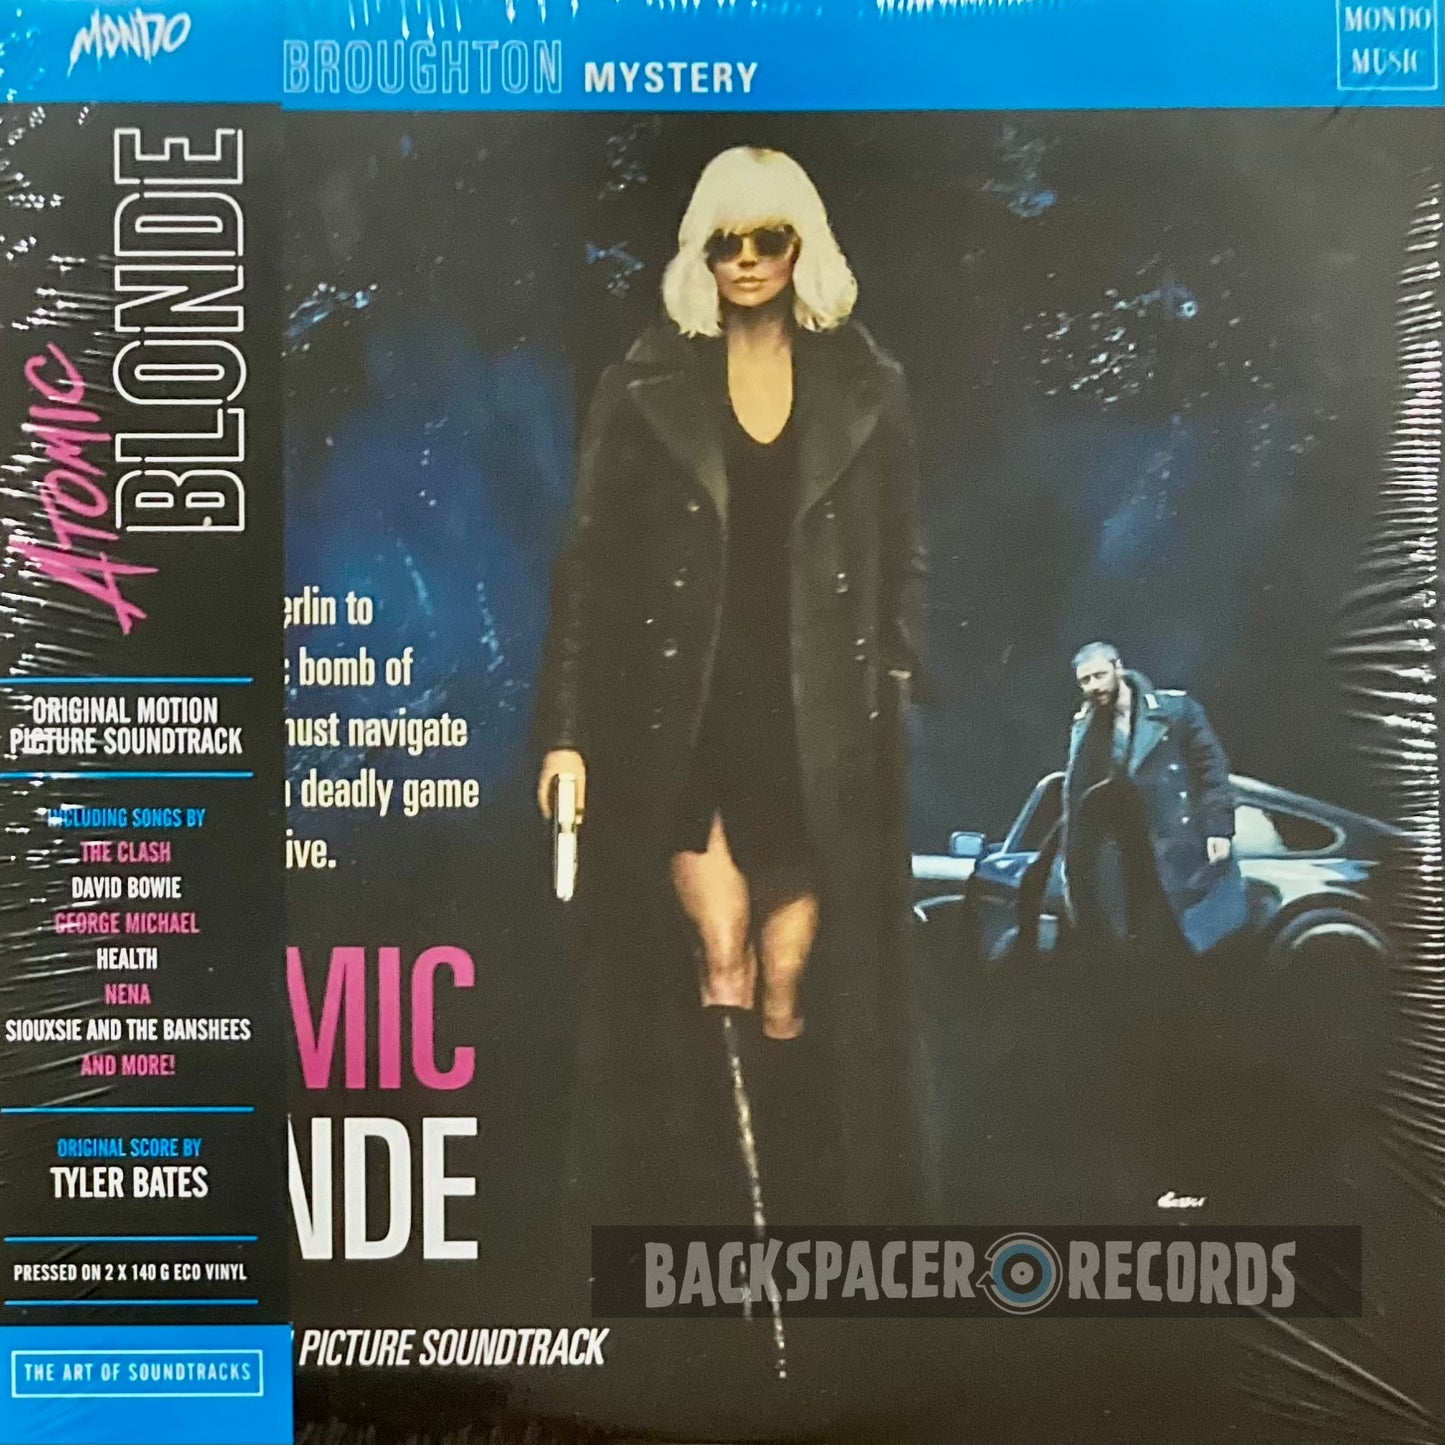 Atomic Blonde: Original Motion Picture Soundtrack - Various Artists (Limited Edition) 2-LP (Sealed)